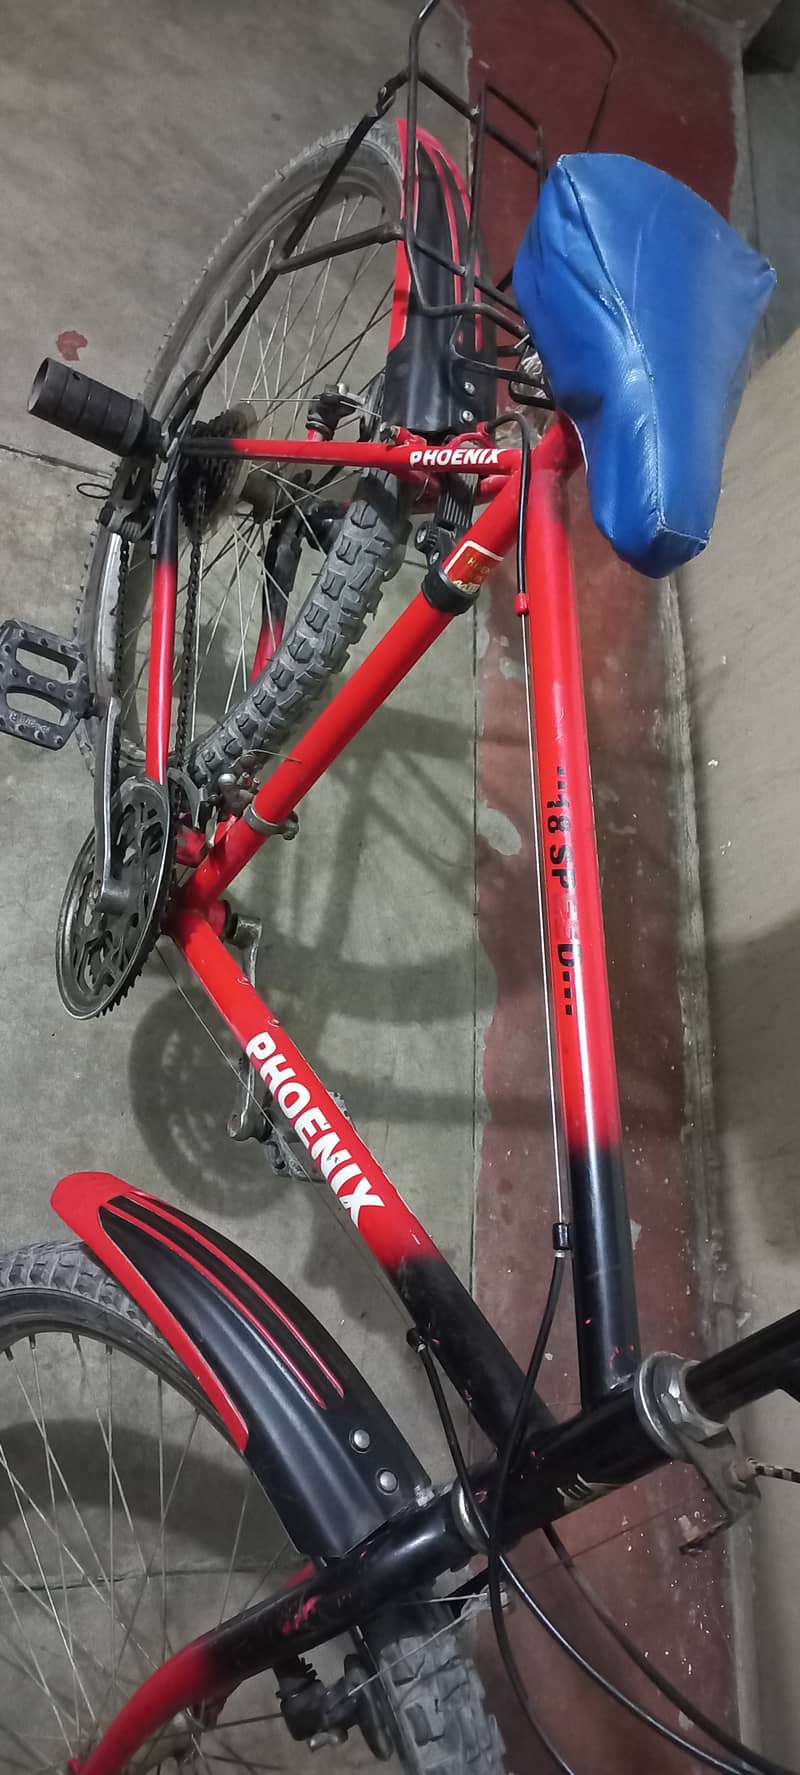 Phoenix Gear Bicycle 03004182963 4